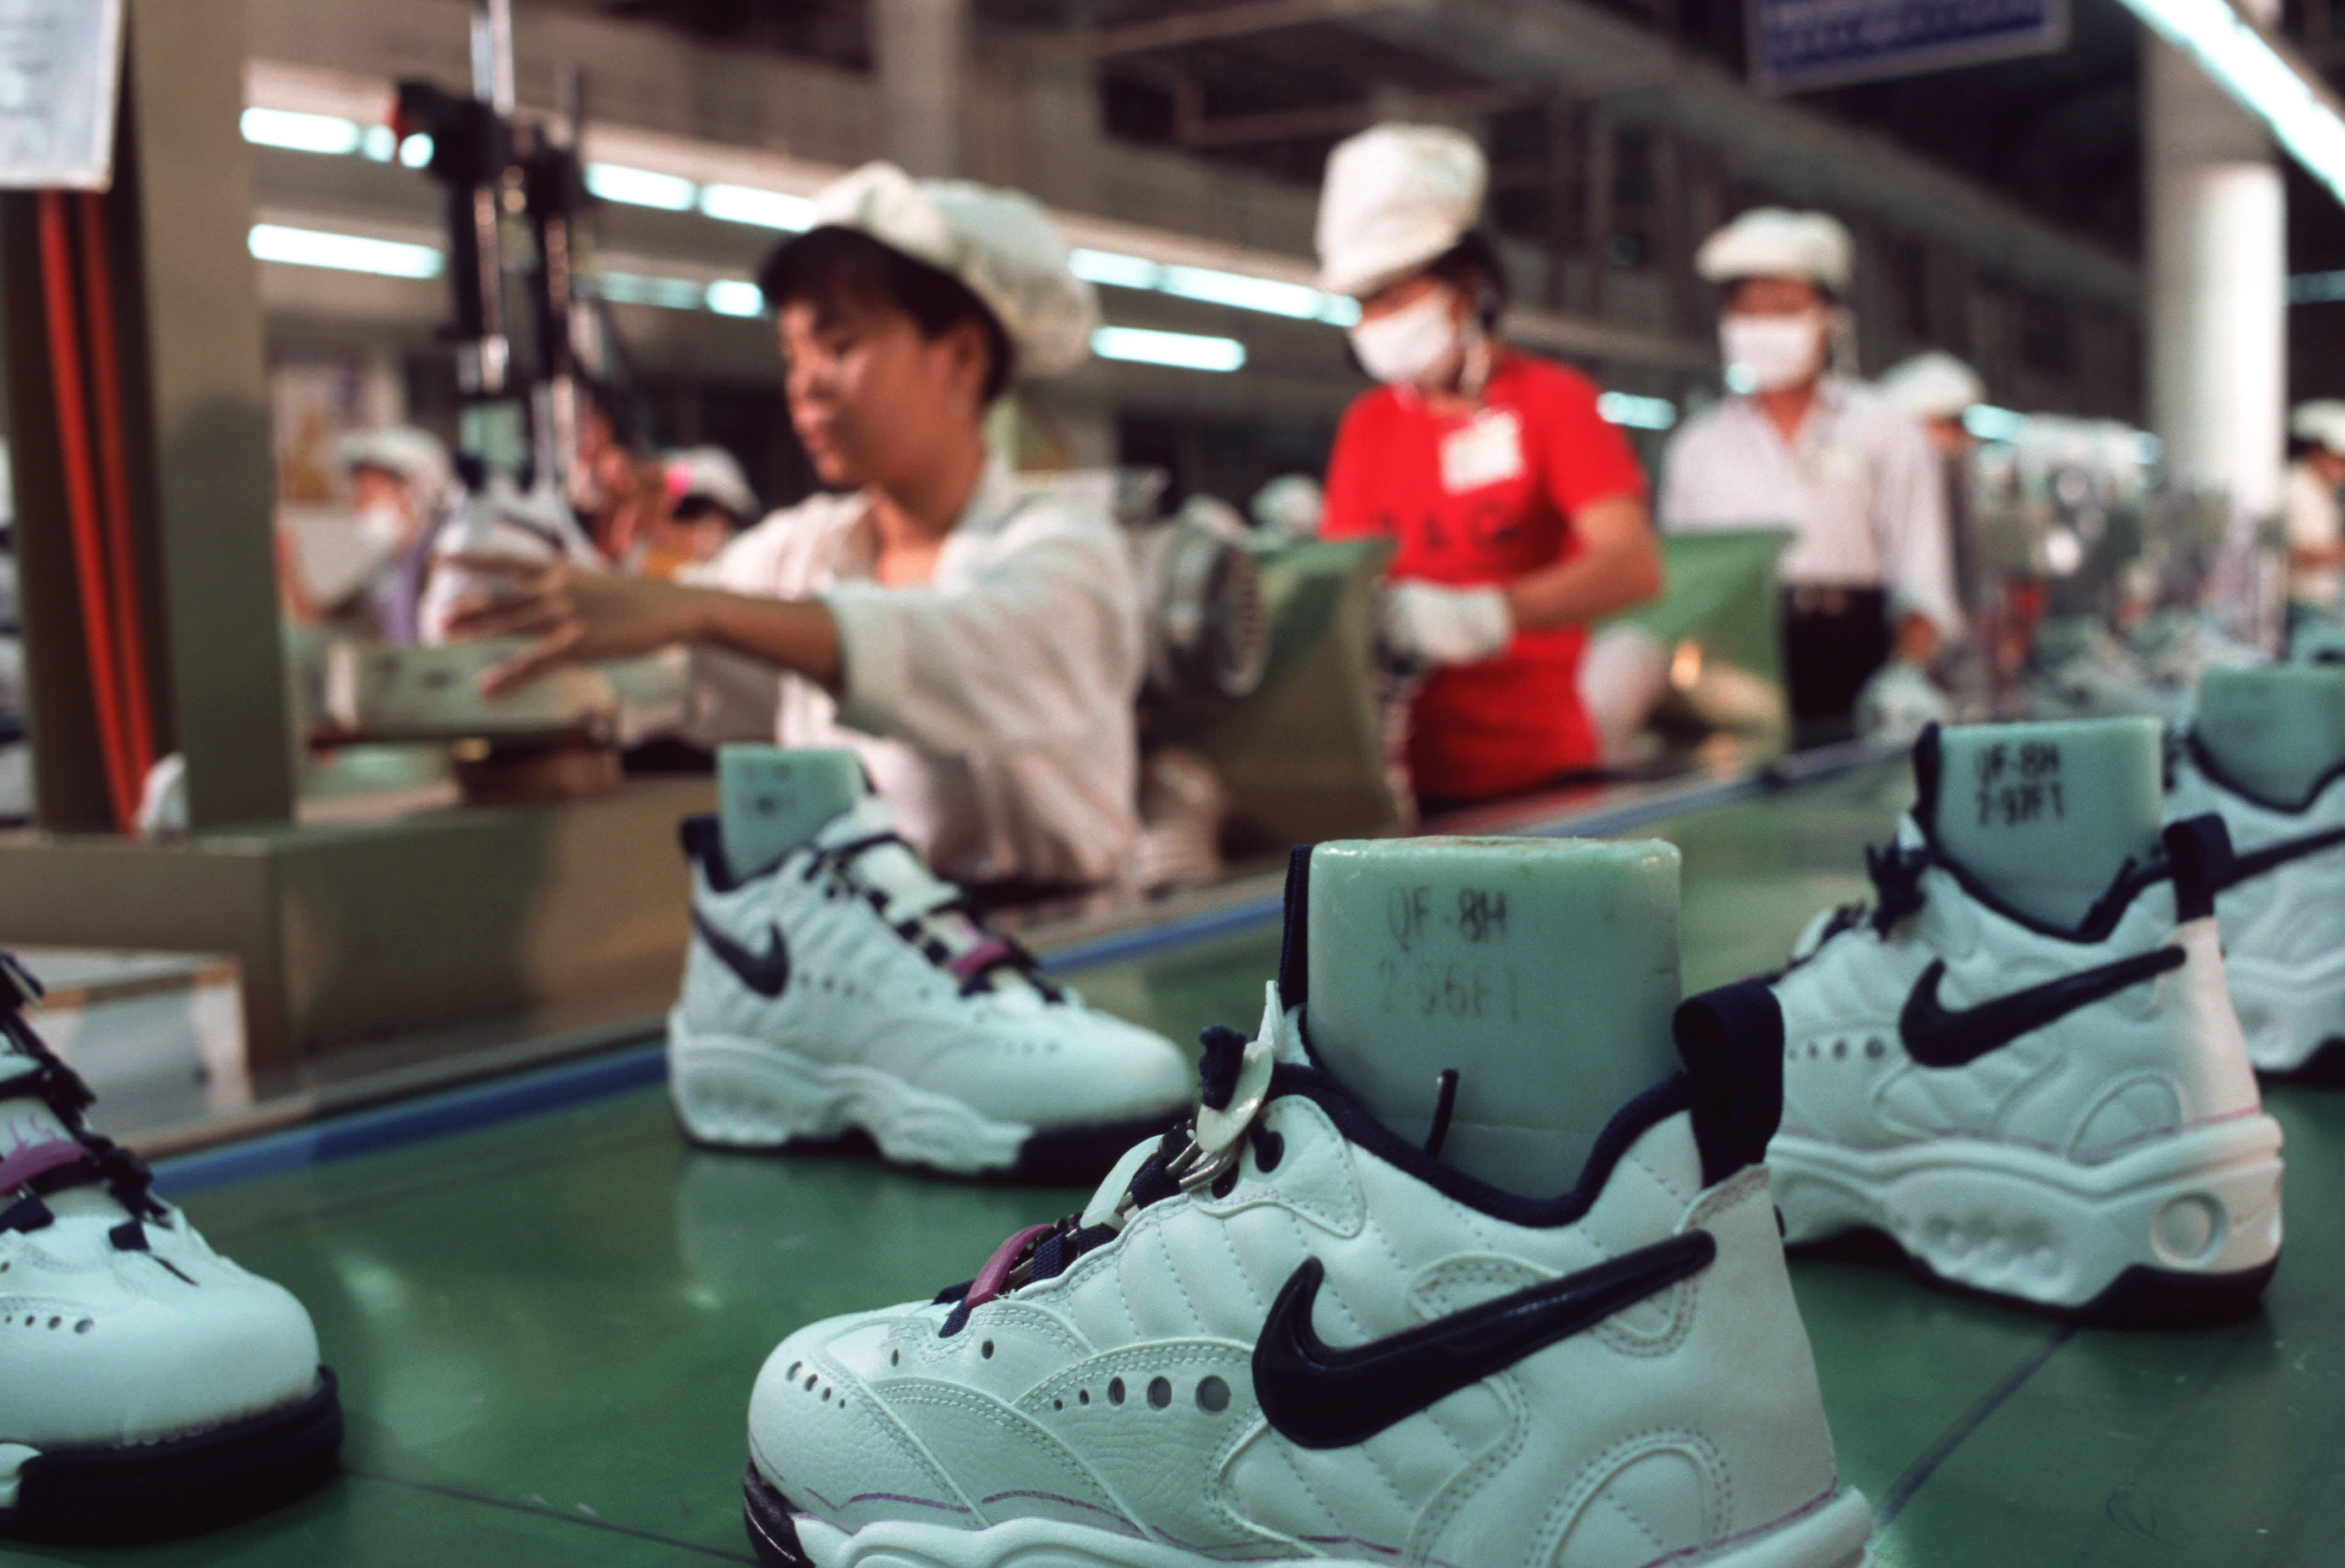 Raadplegen dek tank Nike could run out of shoes from Vietnam as Covid worsens: S&P Global